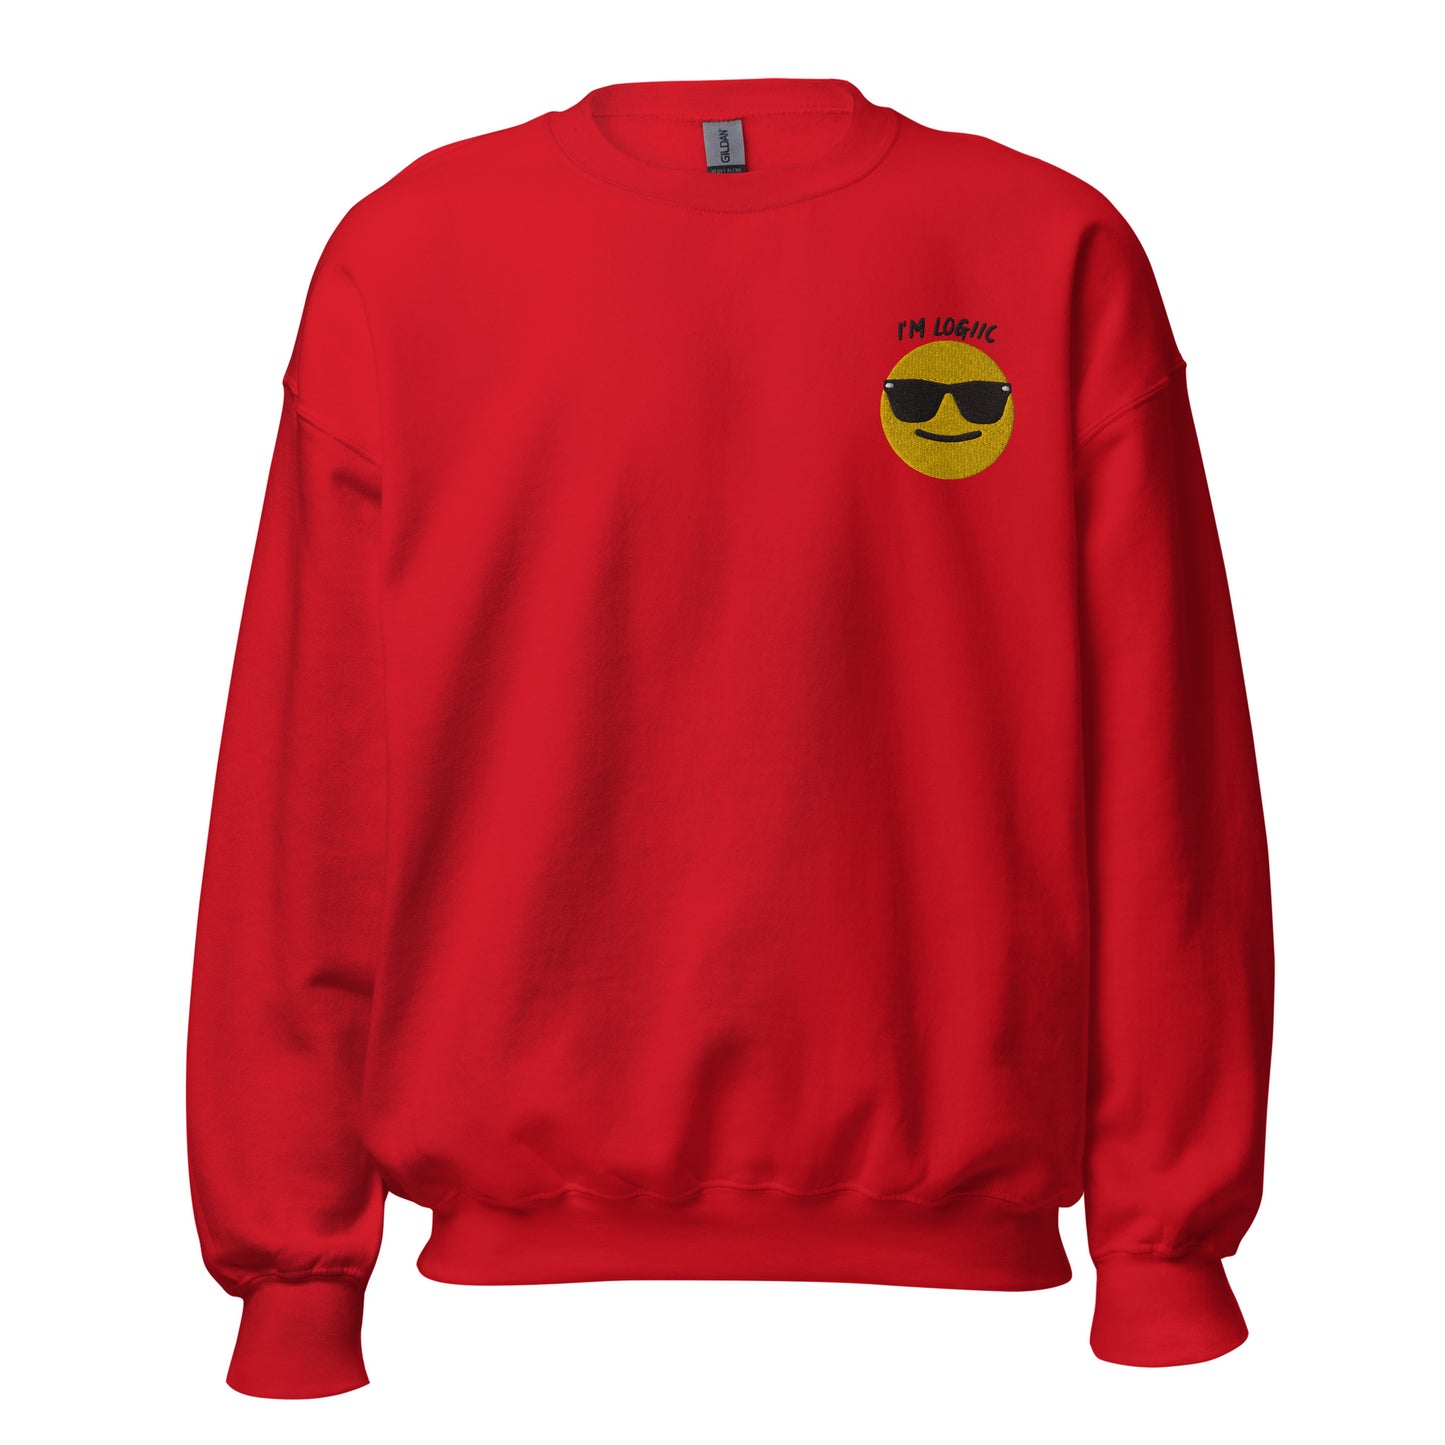 Cool Guy Emoji Unisex Sweatshirt - Red / S